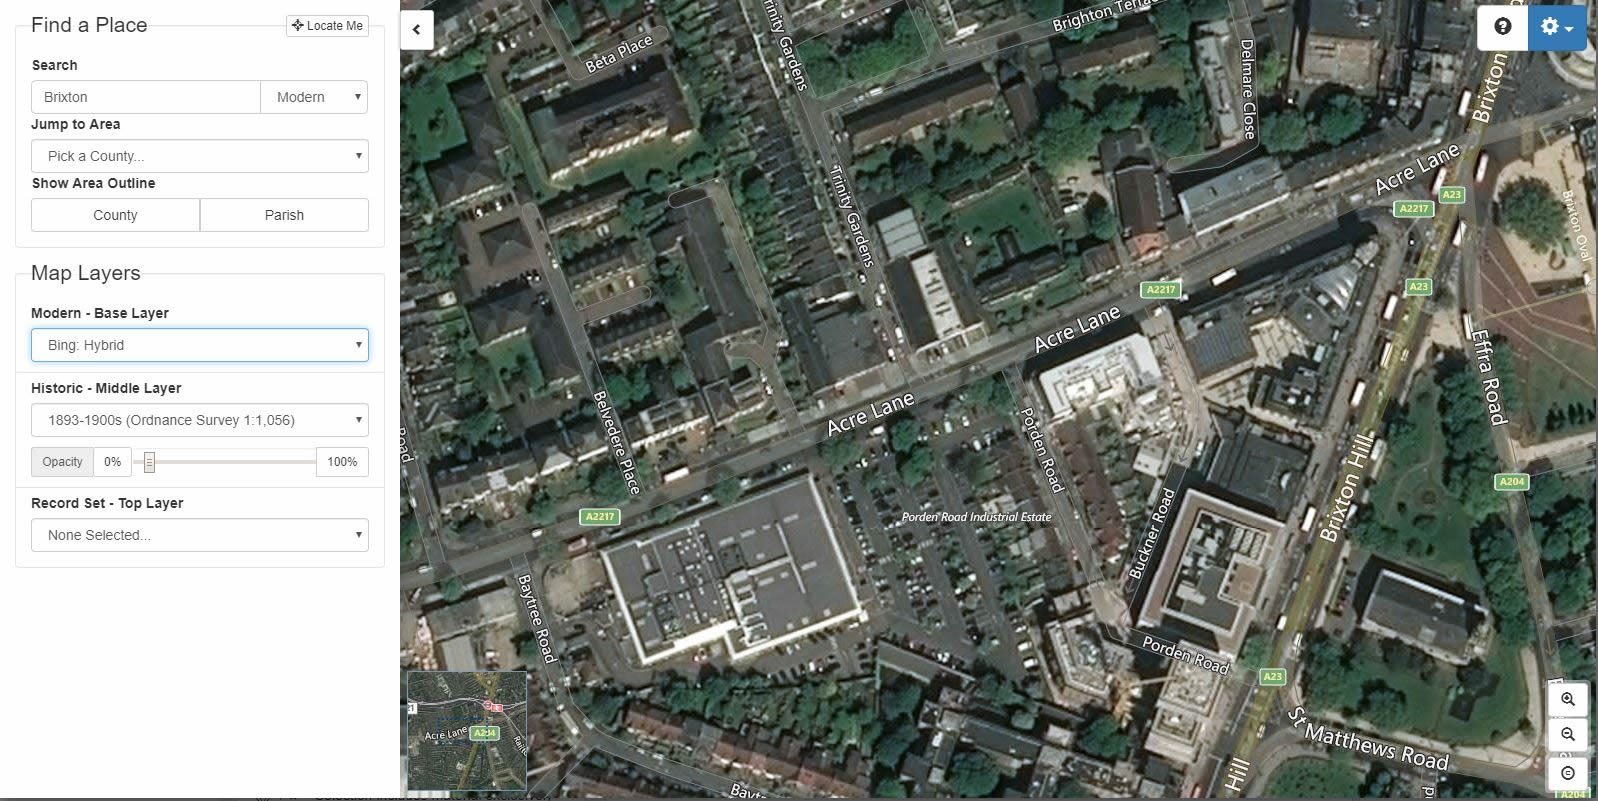 Site of Tesco supermarket on Acre Lane using Bing Hybrid Map on TheGenealogist's Map Explorer